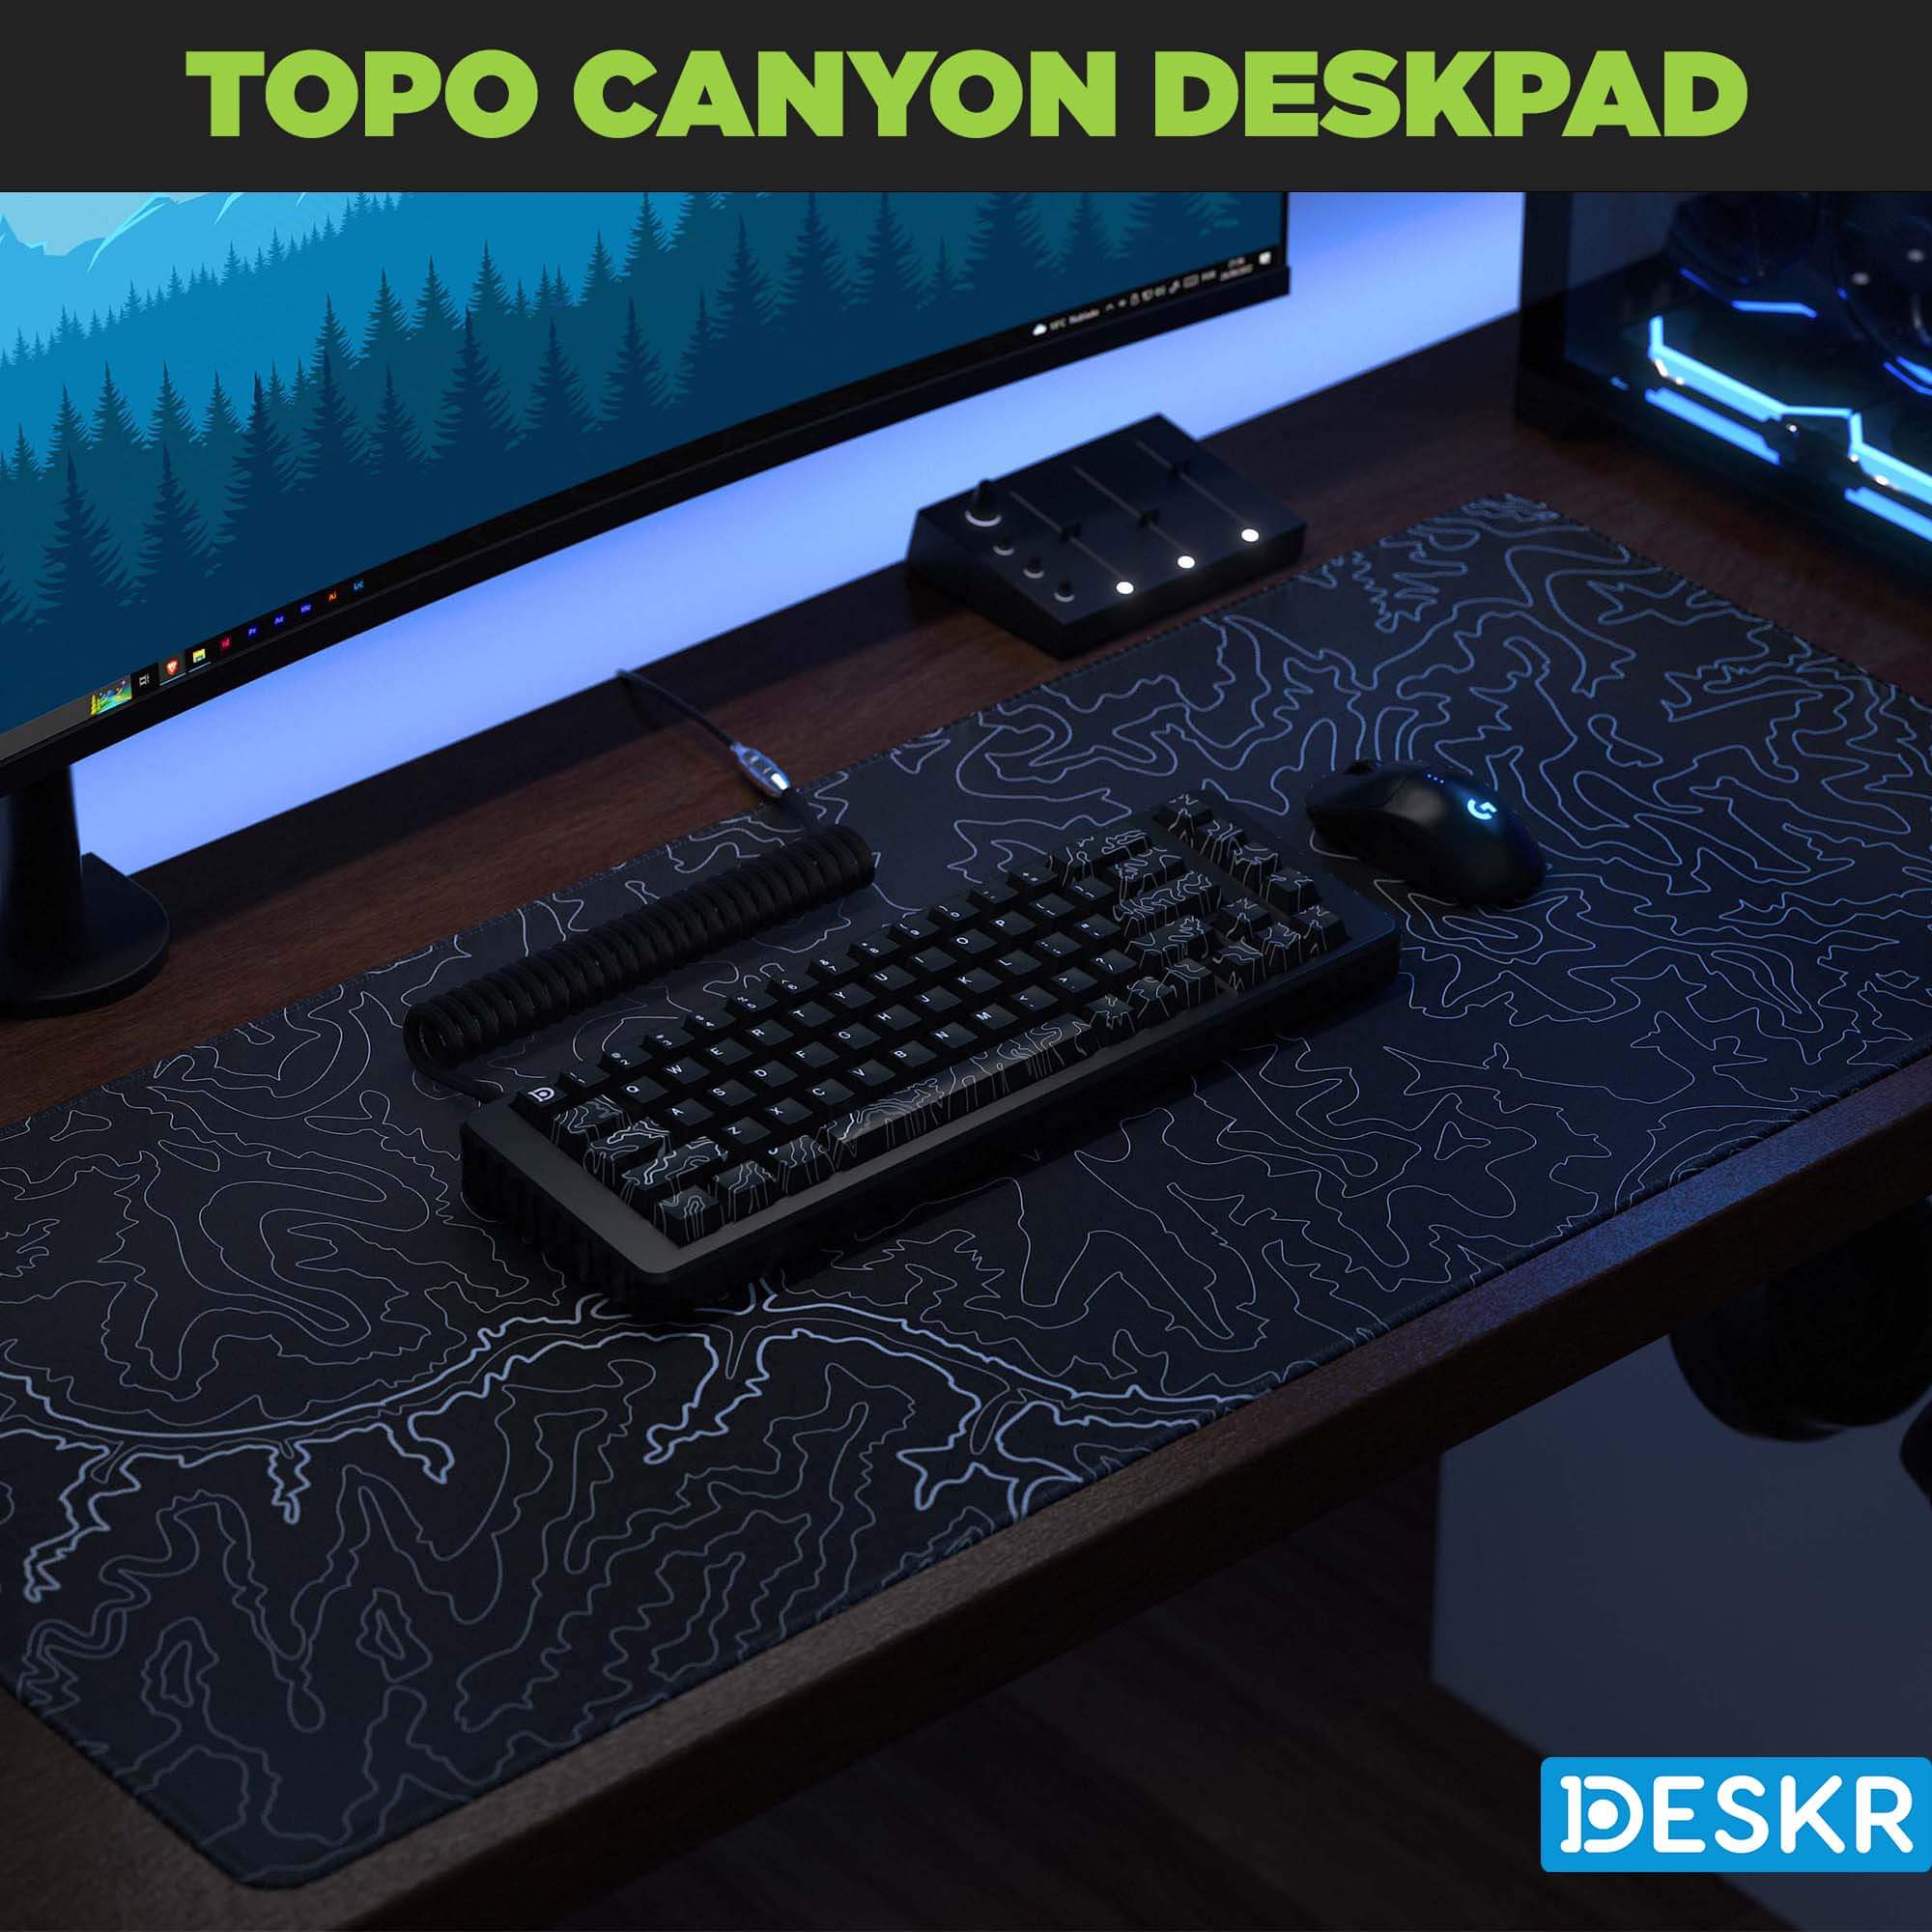 White Topo Canyon Deskpad